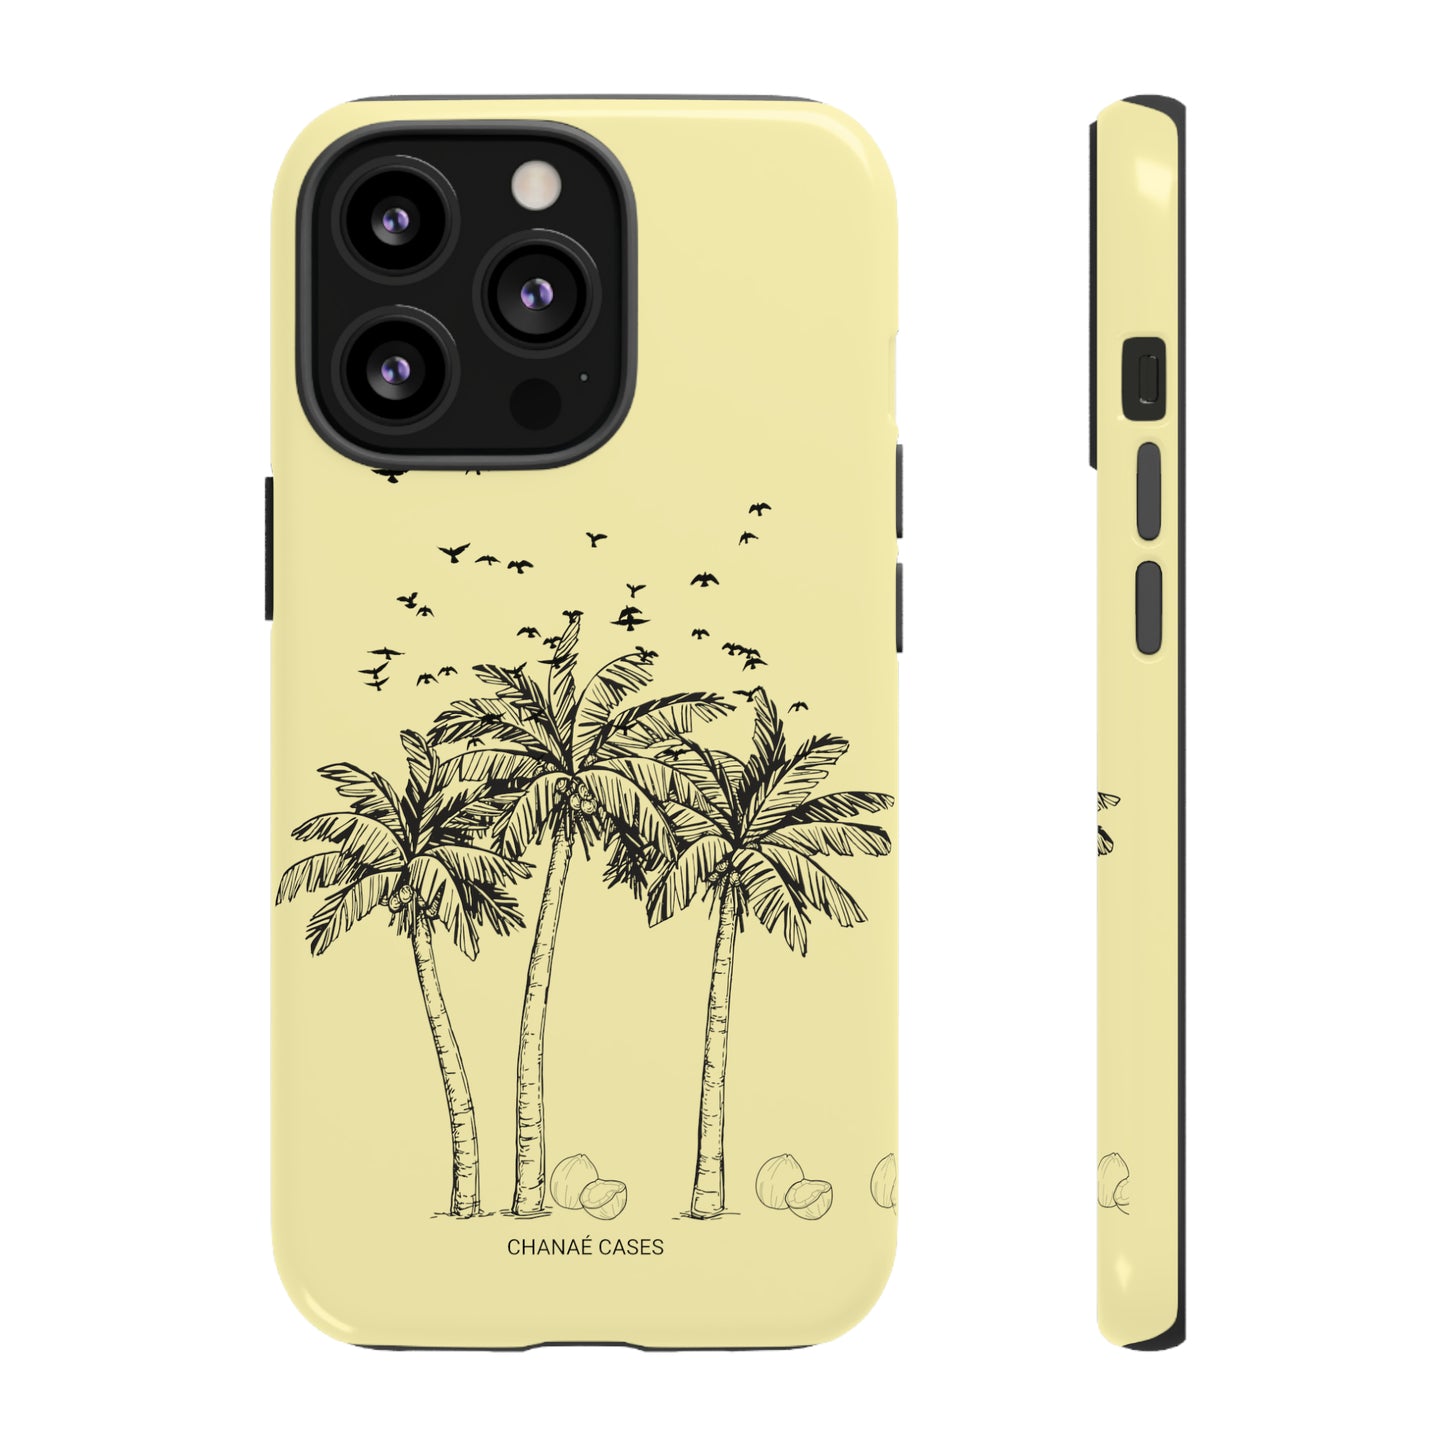 Exotica iPhone "Tough" Case (Light Yellow)